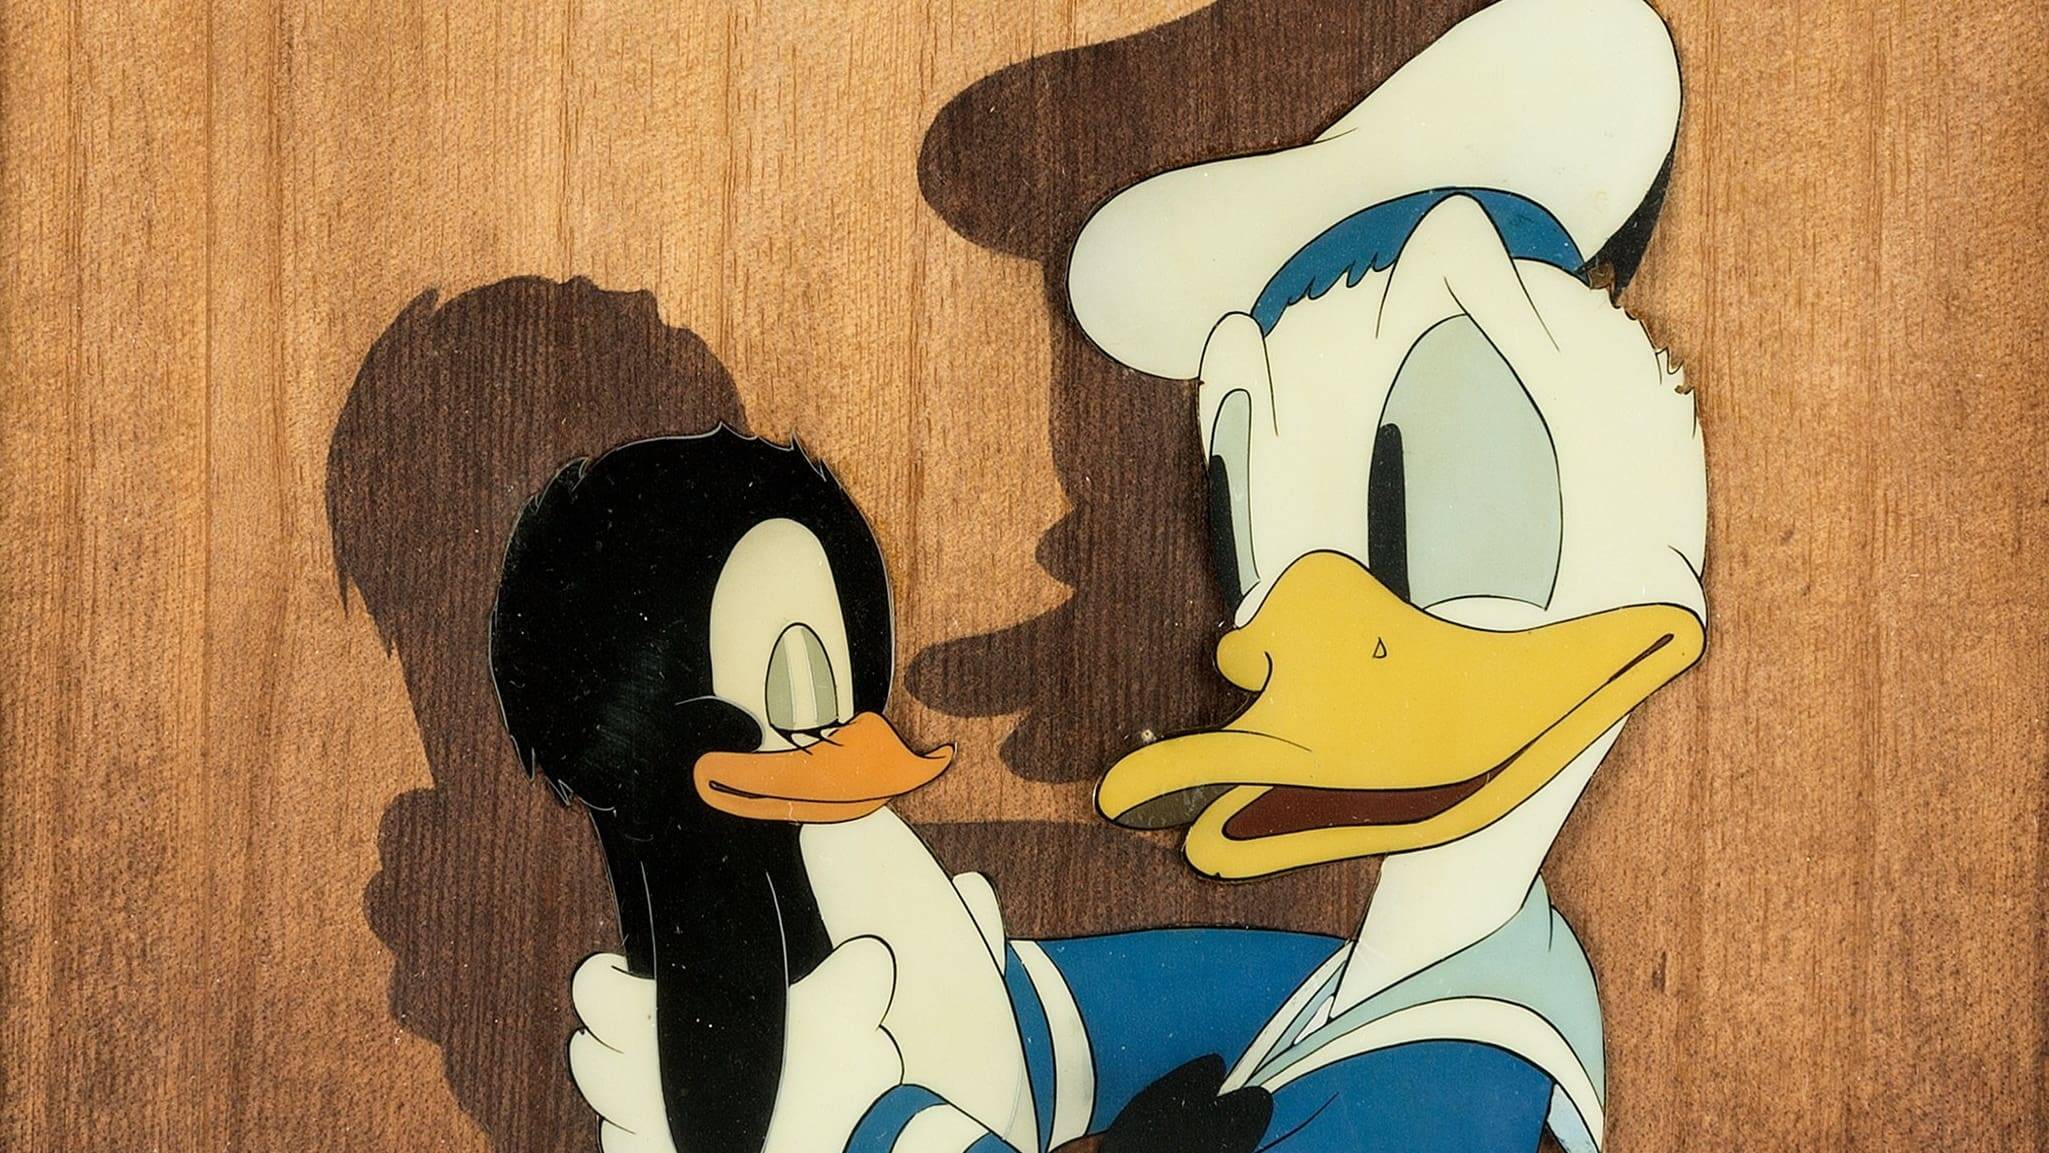 Cubierta de El pato Donald: El pingüino de Donald